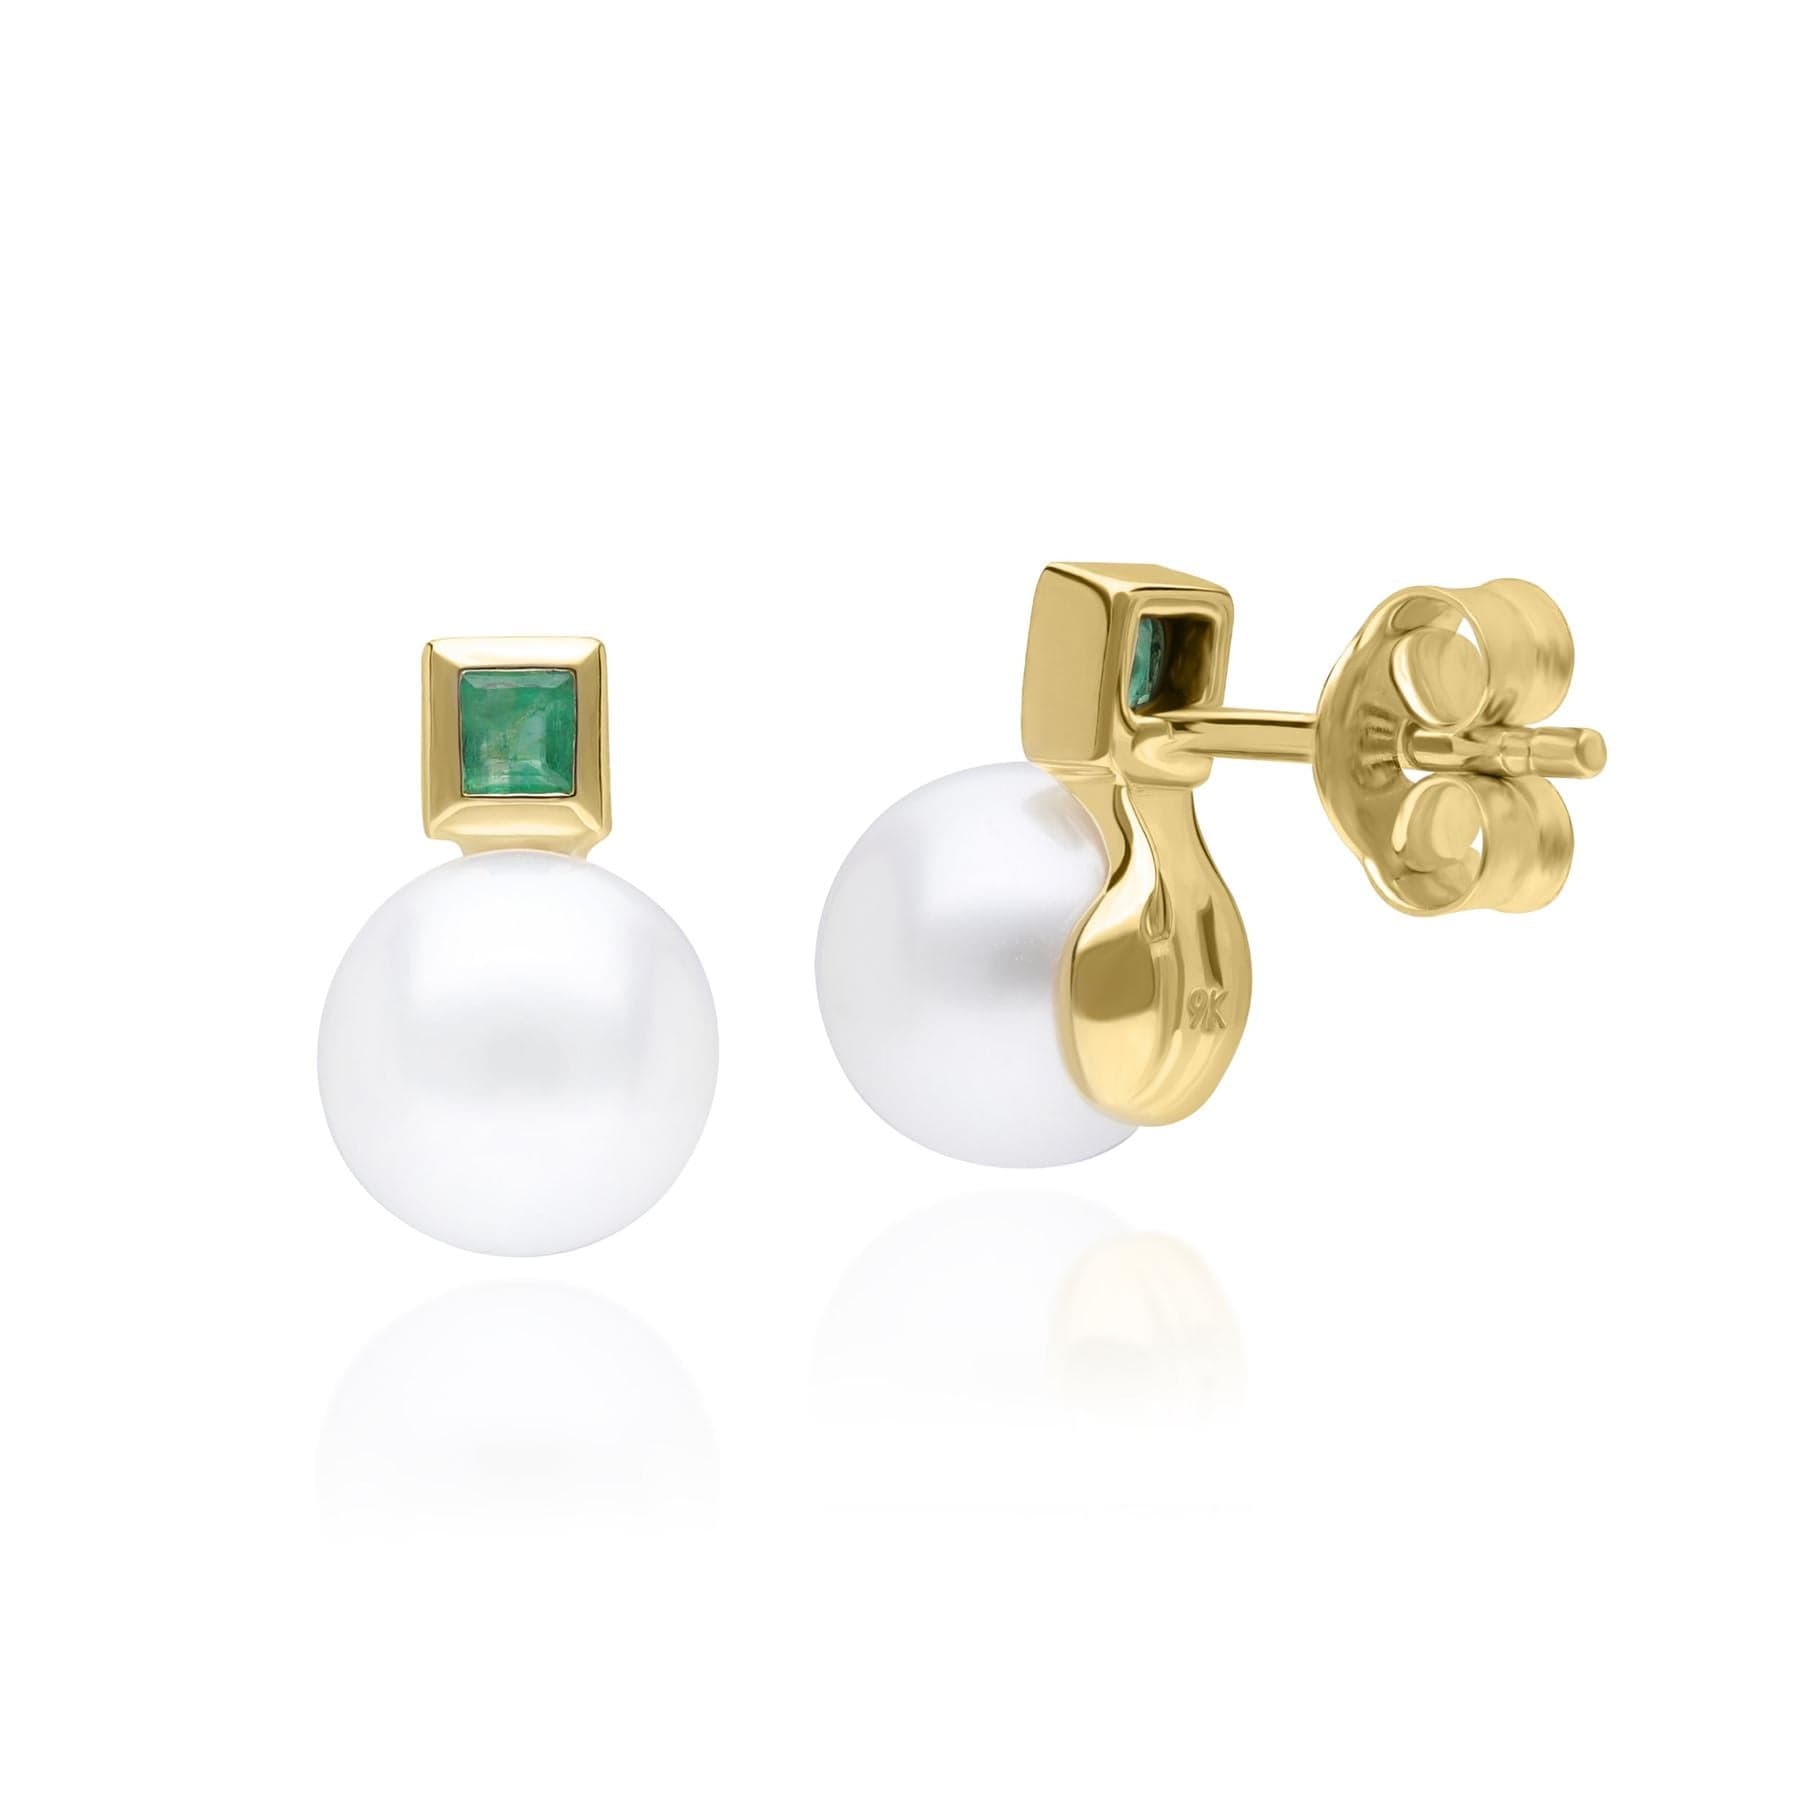 Modern Pearl & Square Emerald Stud Earrings in 9ct Yellow Gold - Gemondo